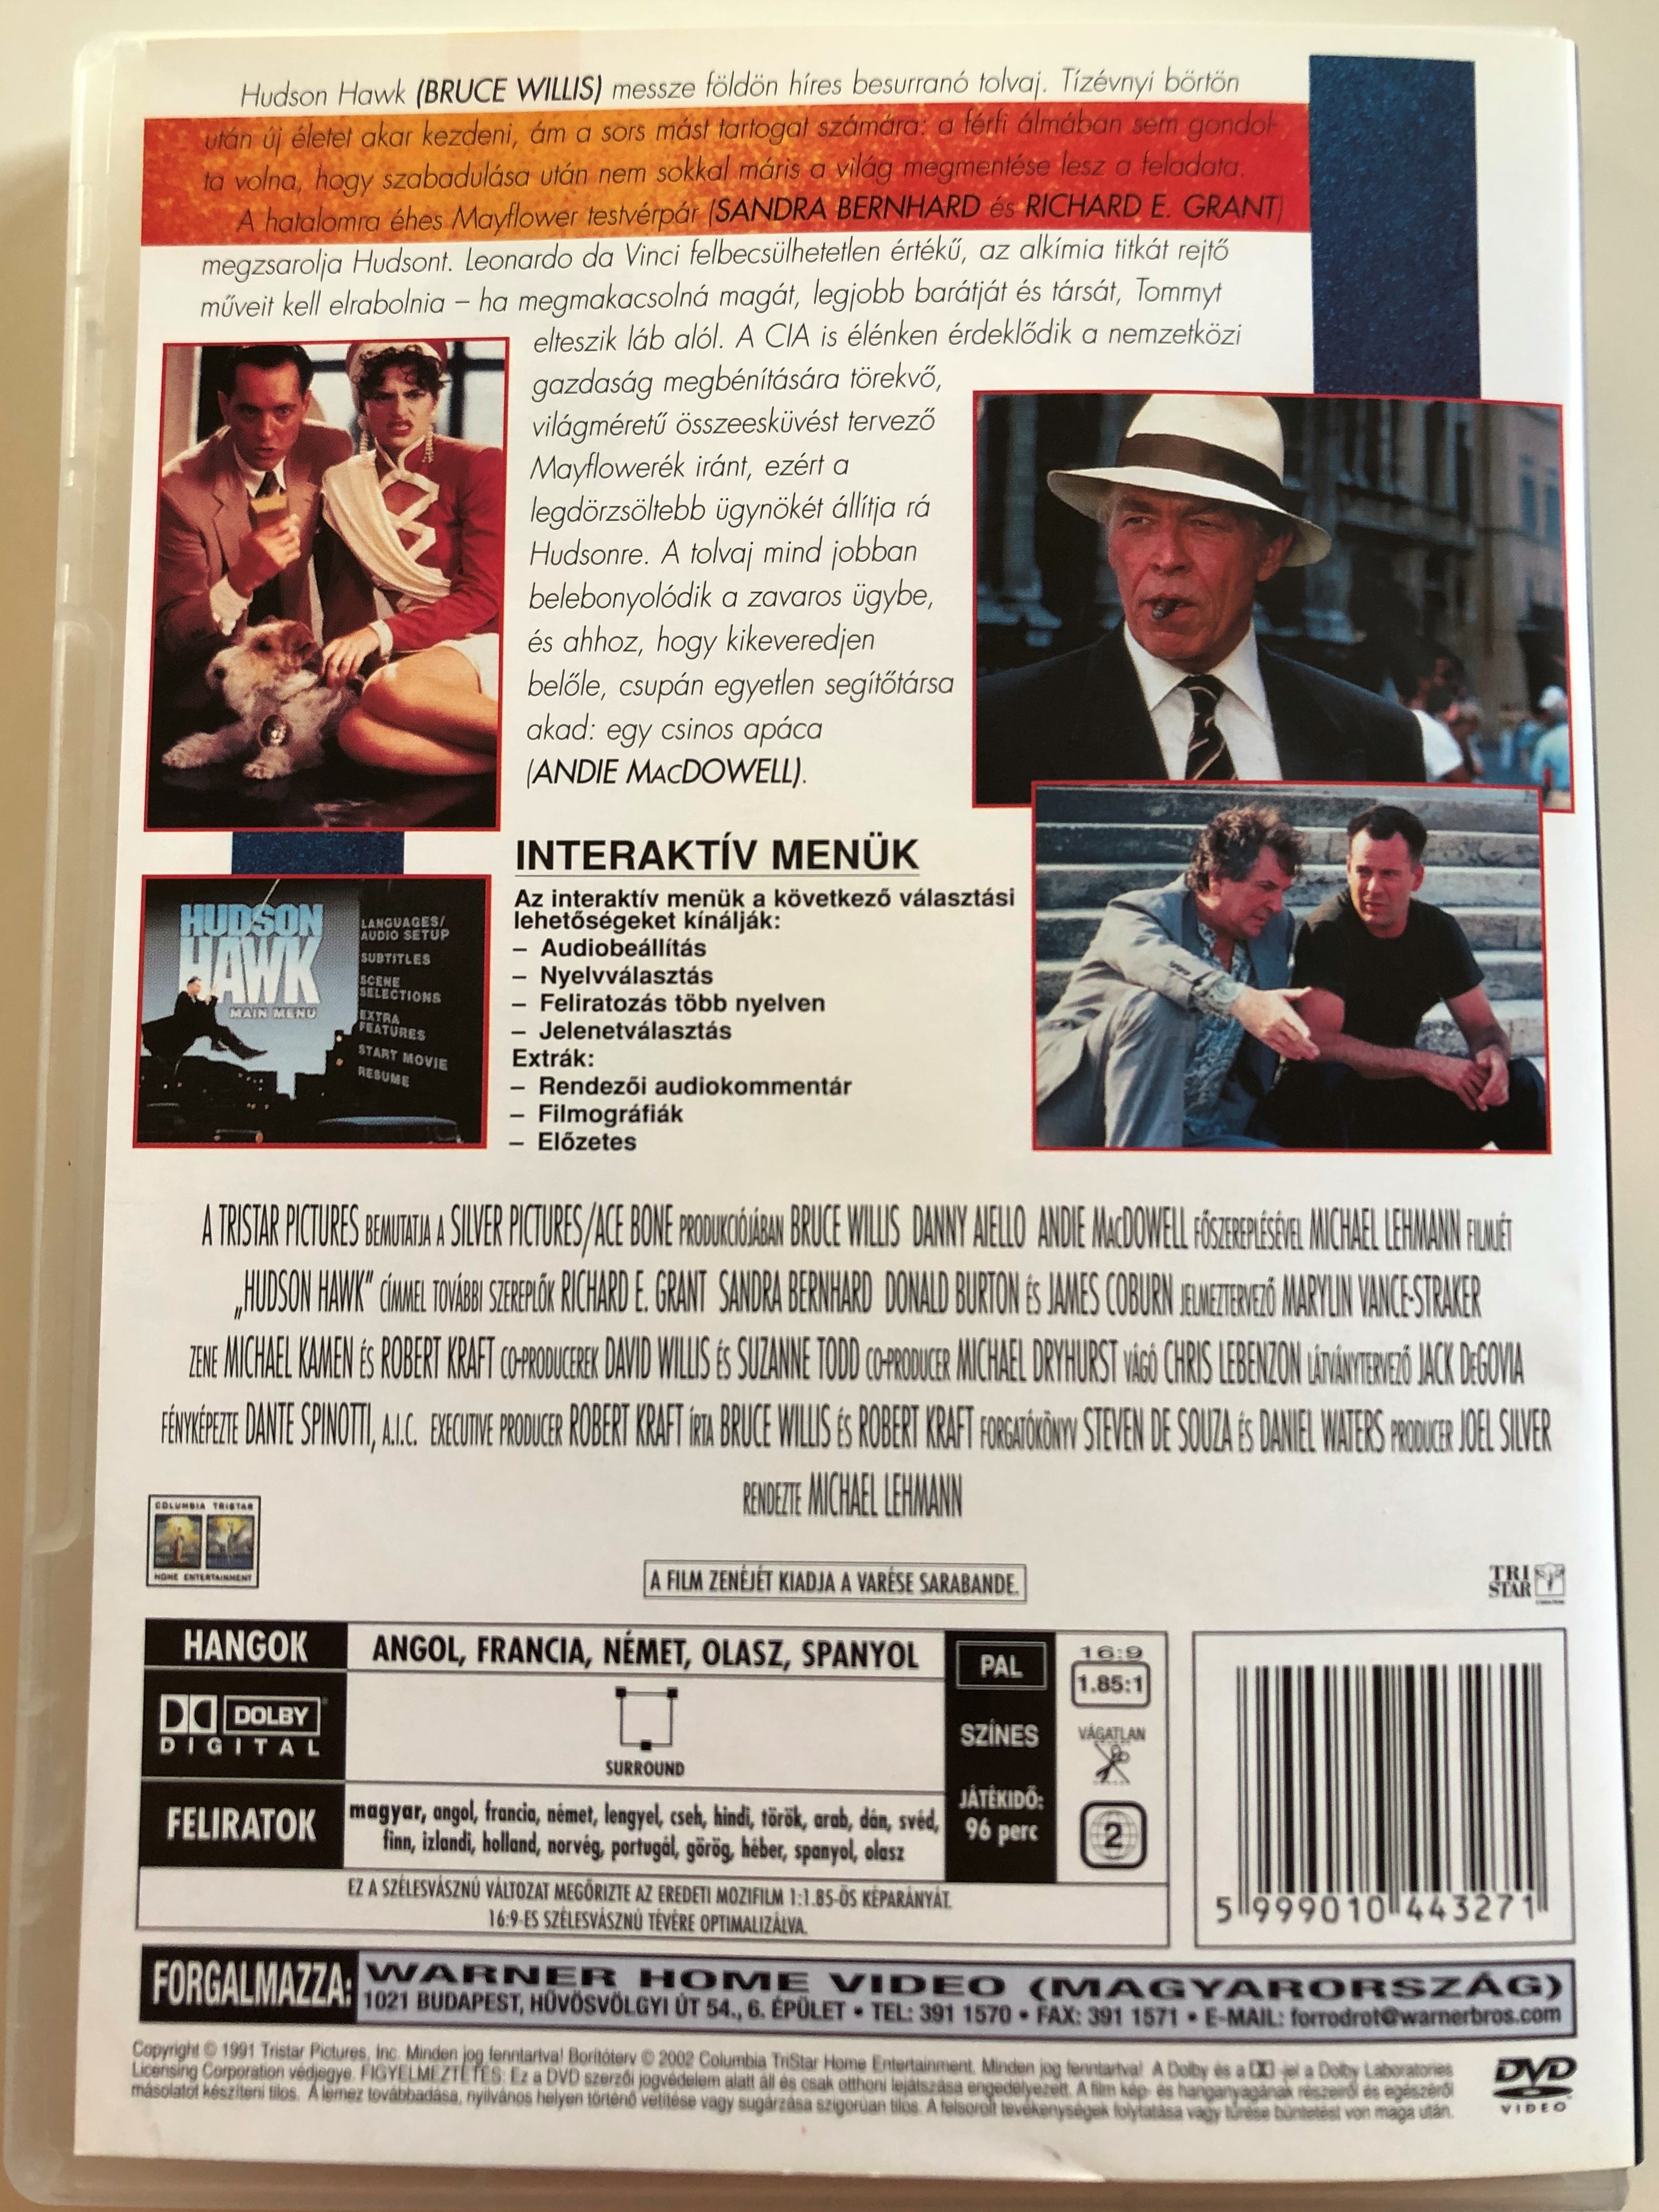 hudson-hawk-dvd-1991-directed-by-michael-lehmann-starring-bruce-willis-danny-aiello-andie-macdowell-2-.jpg